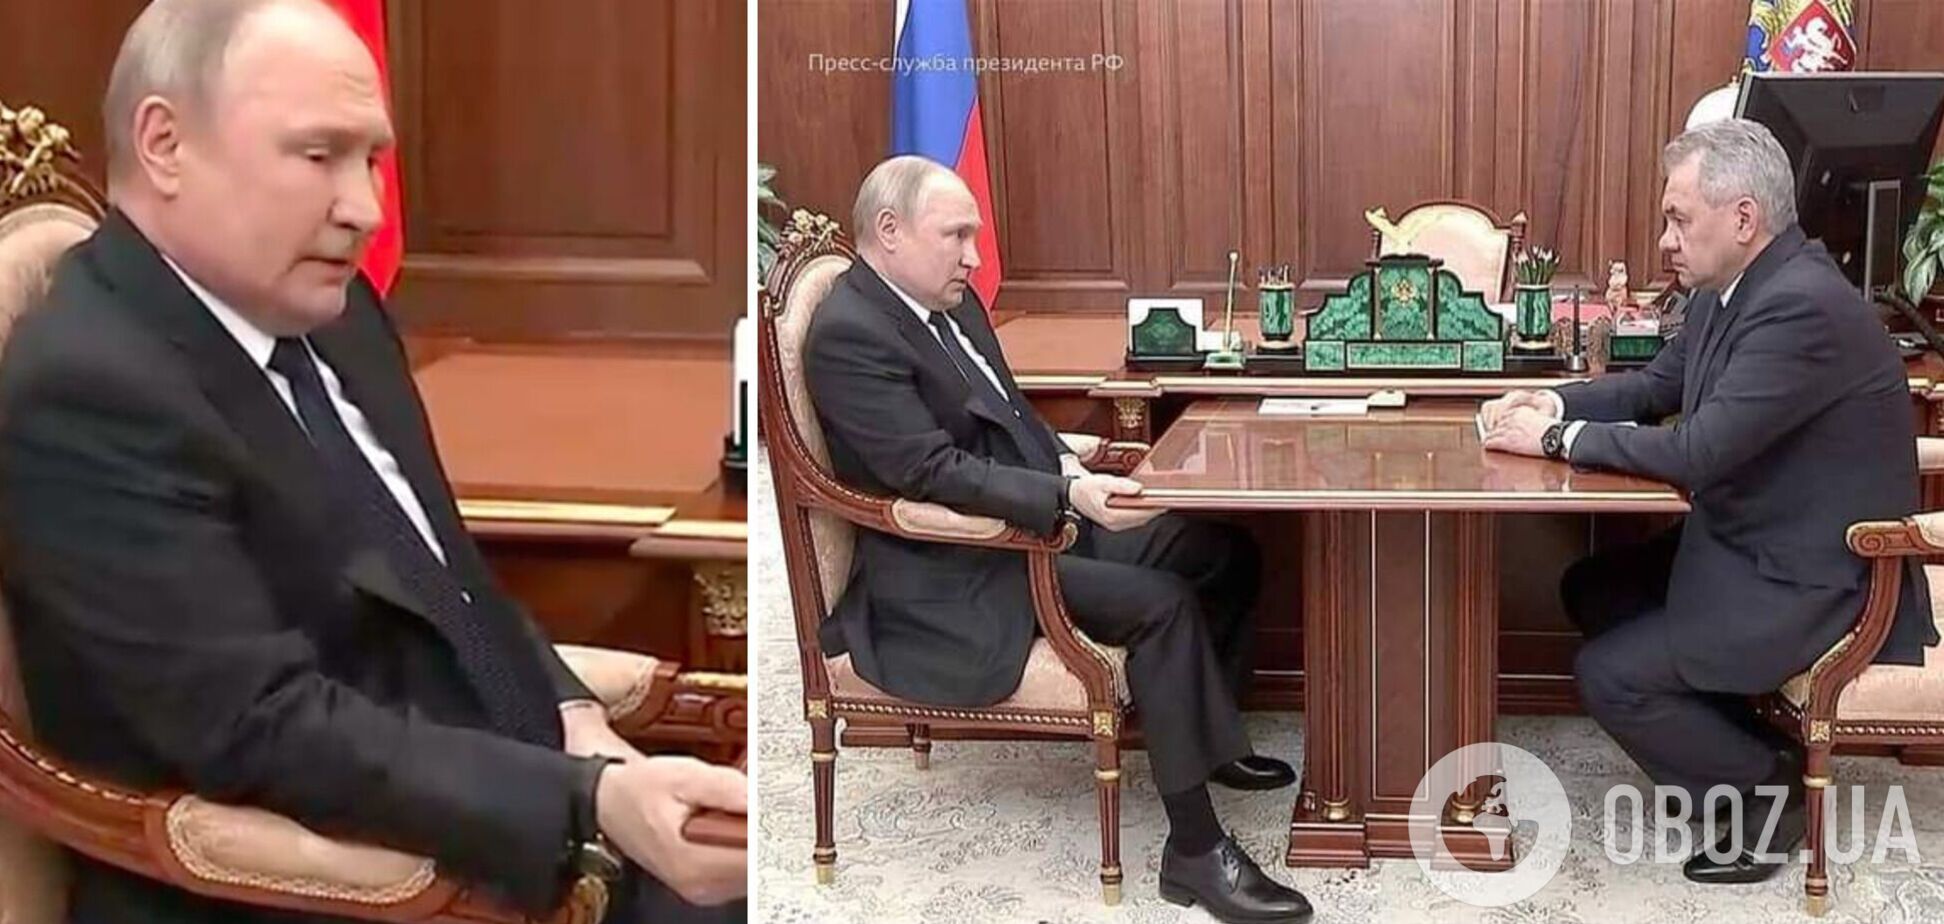 Президент РФ очень нервничал и хватался за стол